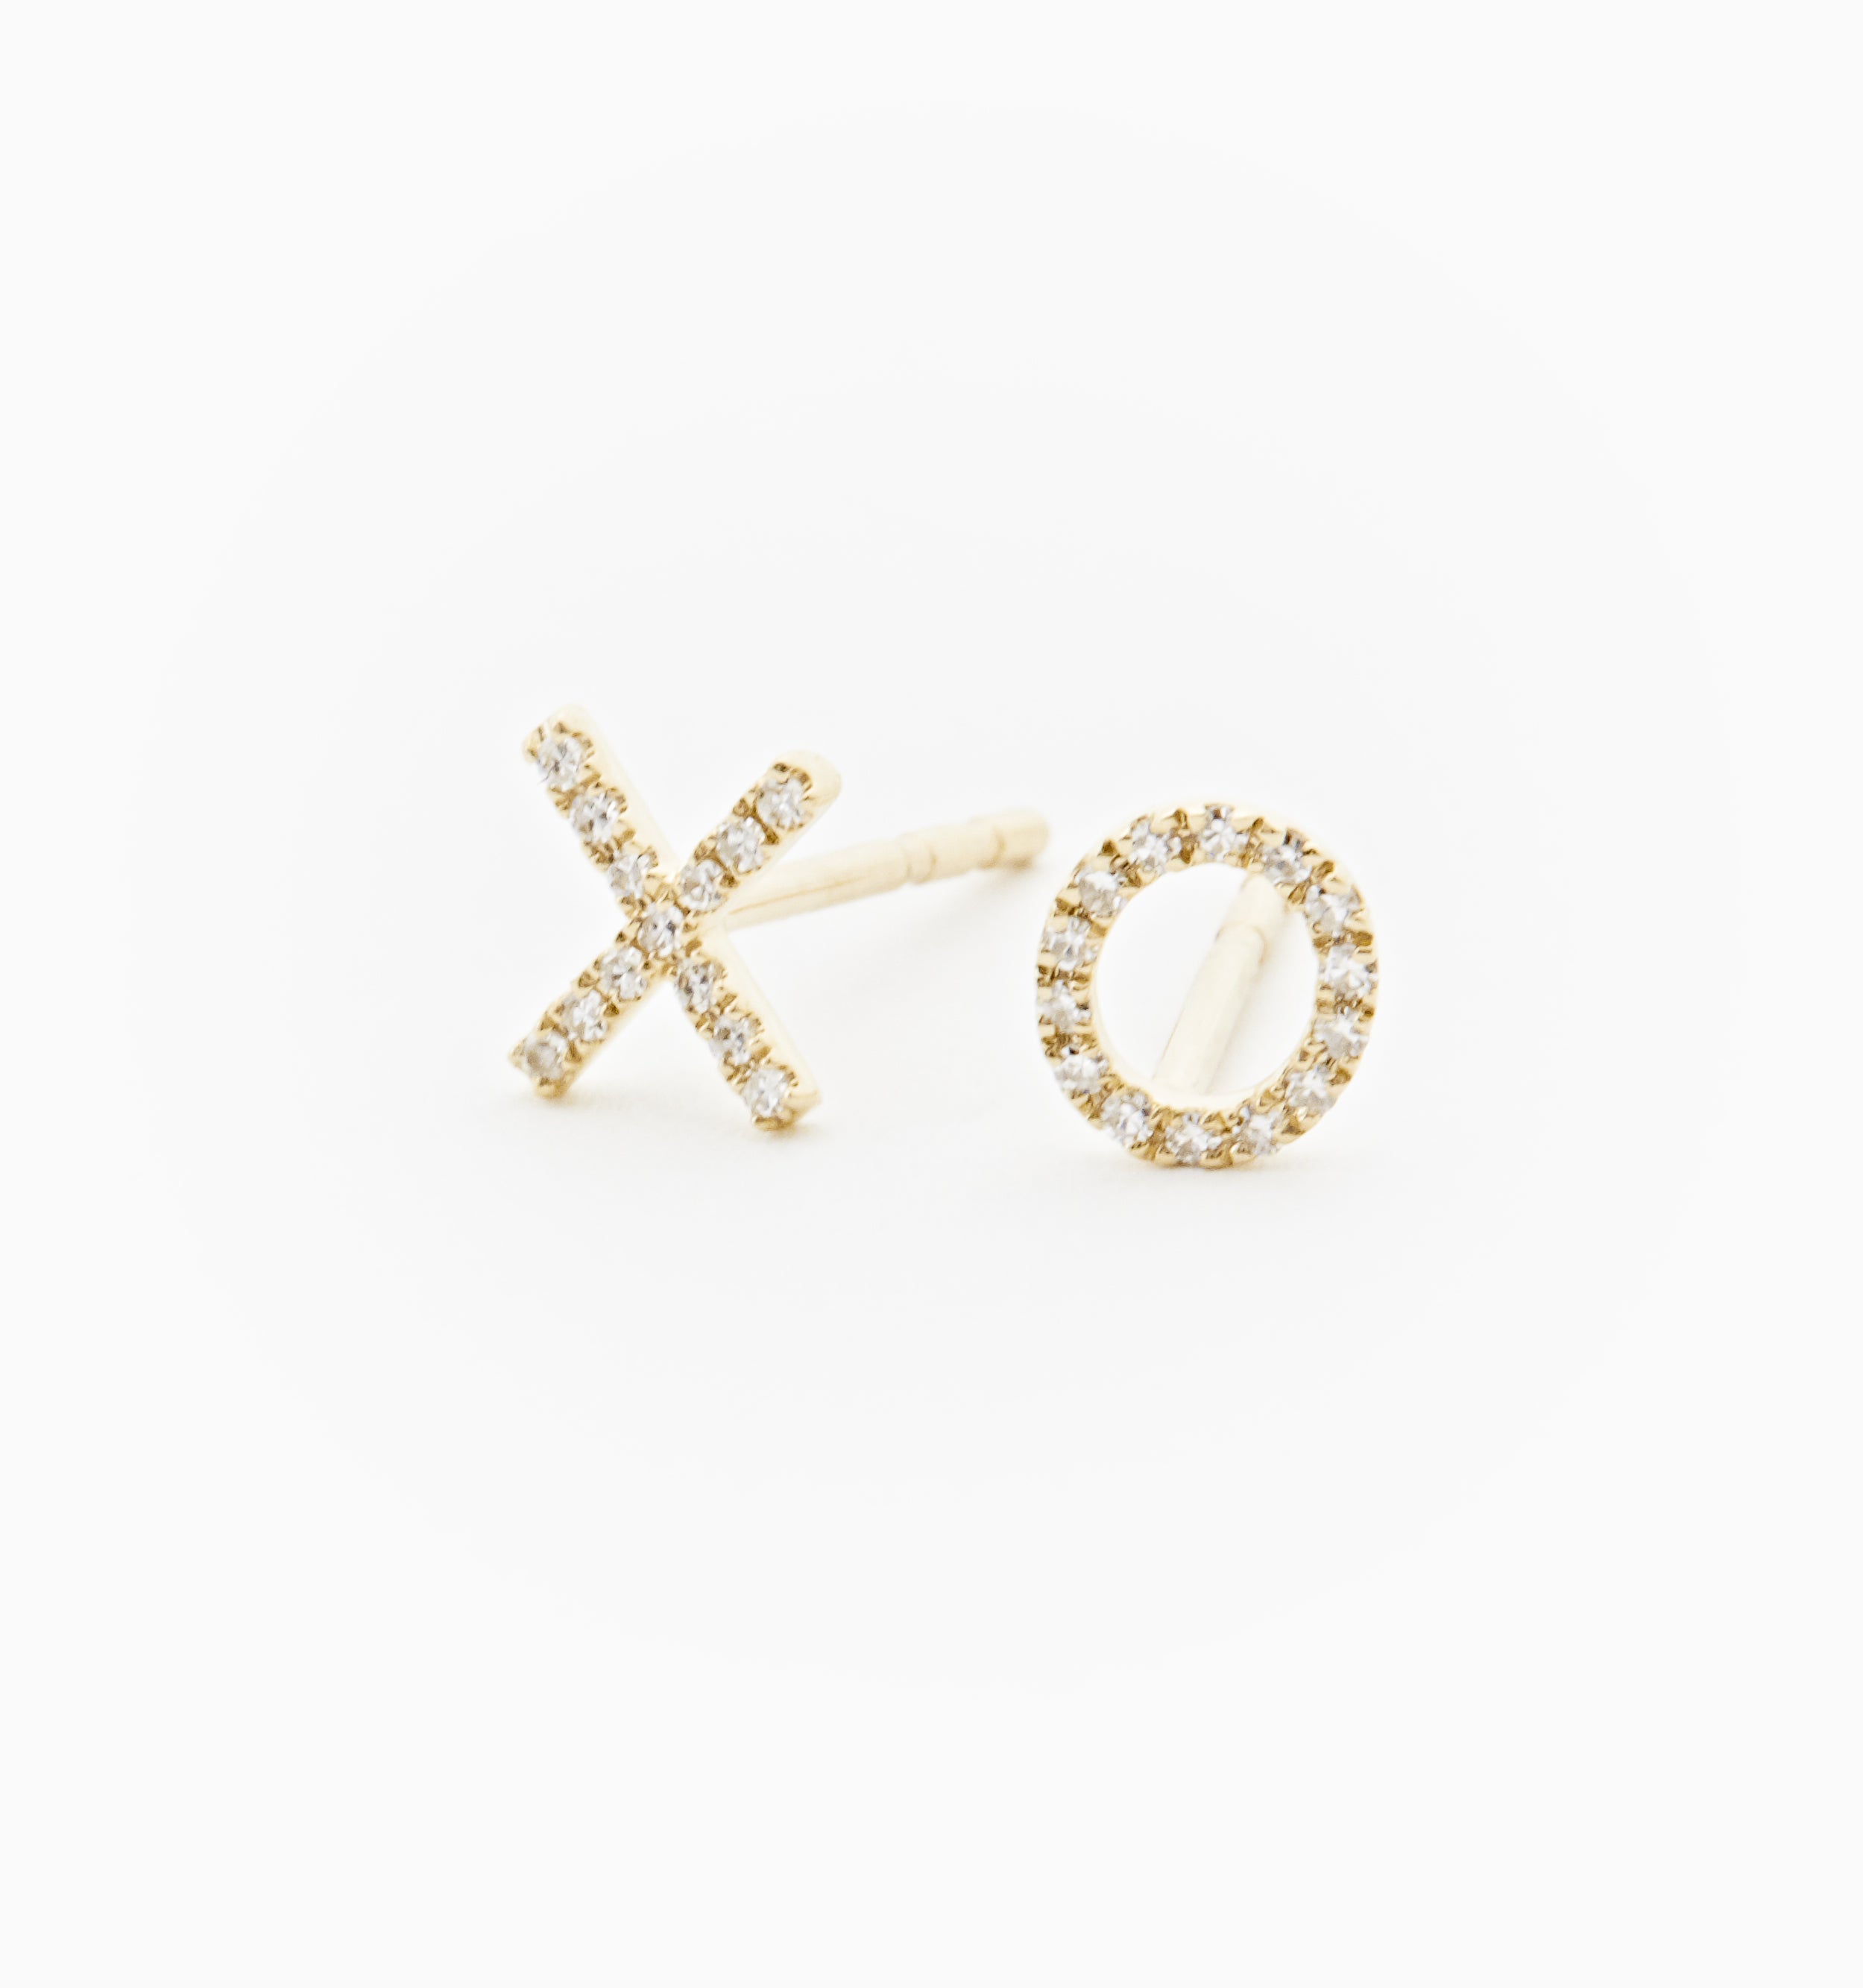 XO Diamond Stud Earrings